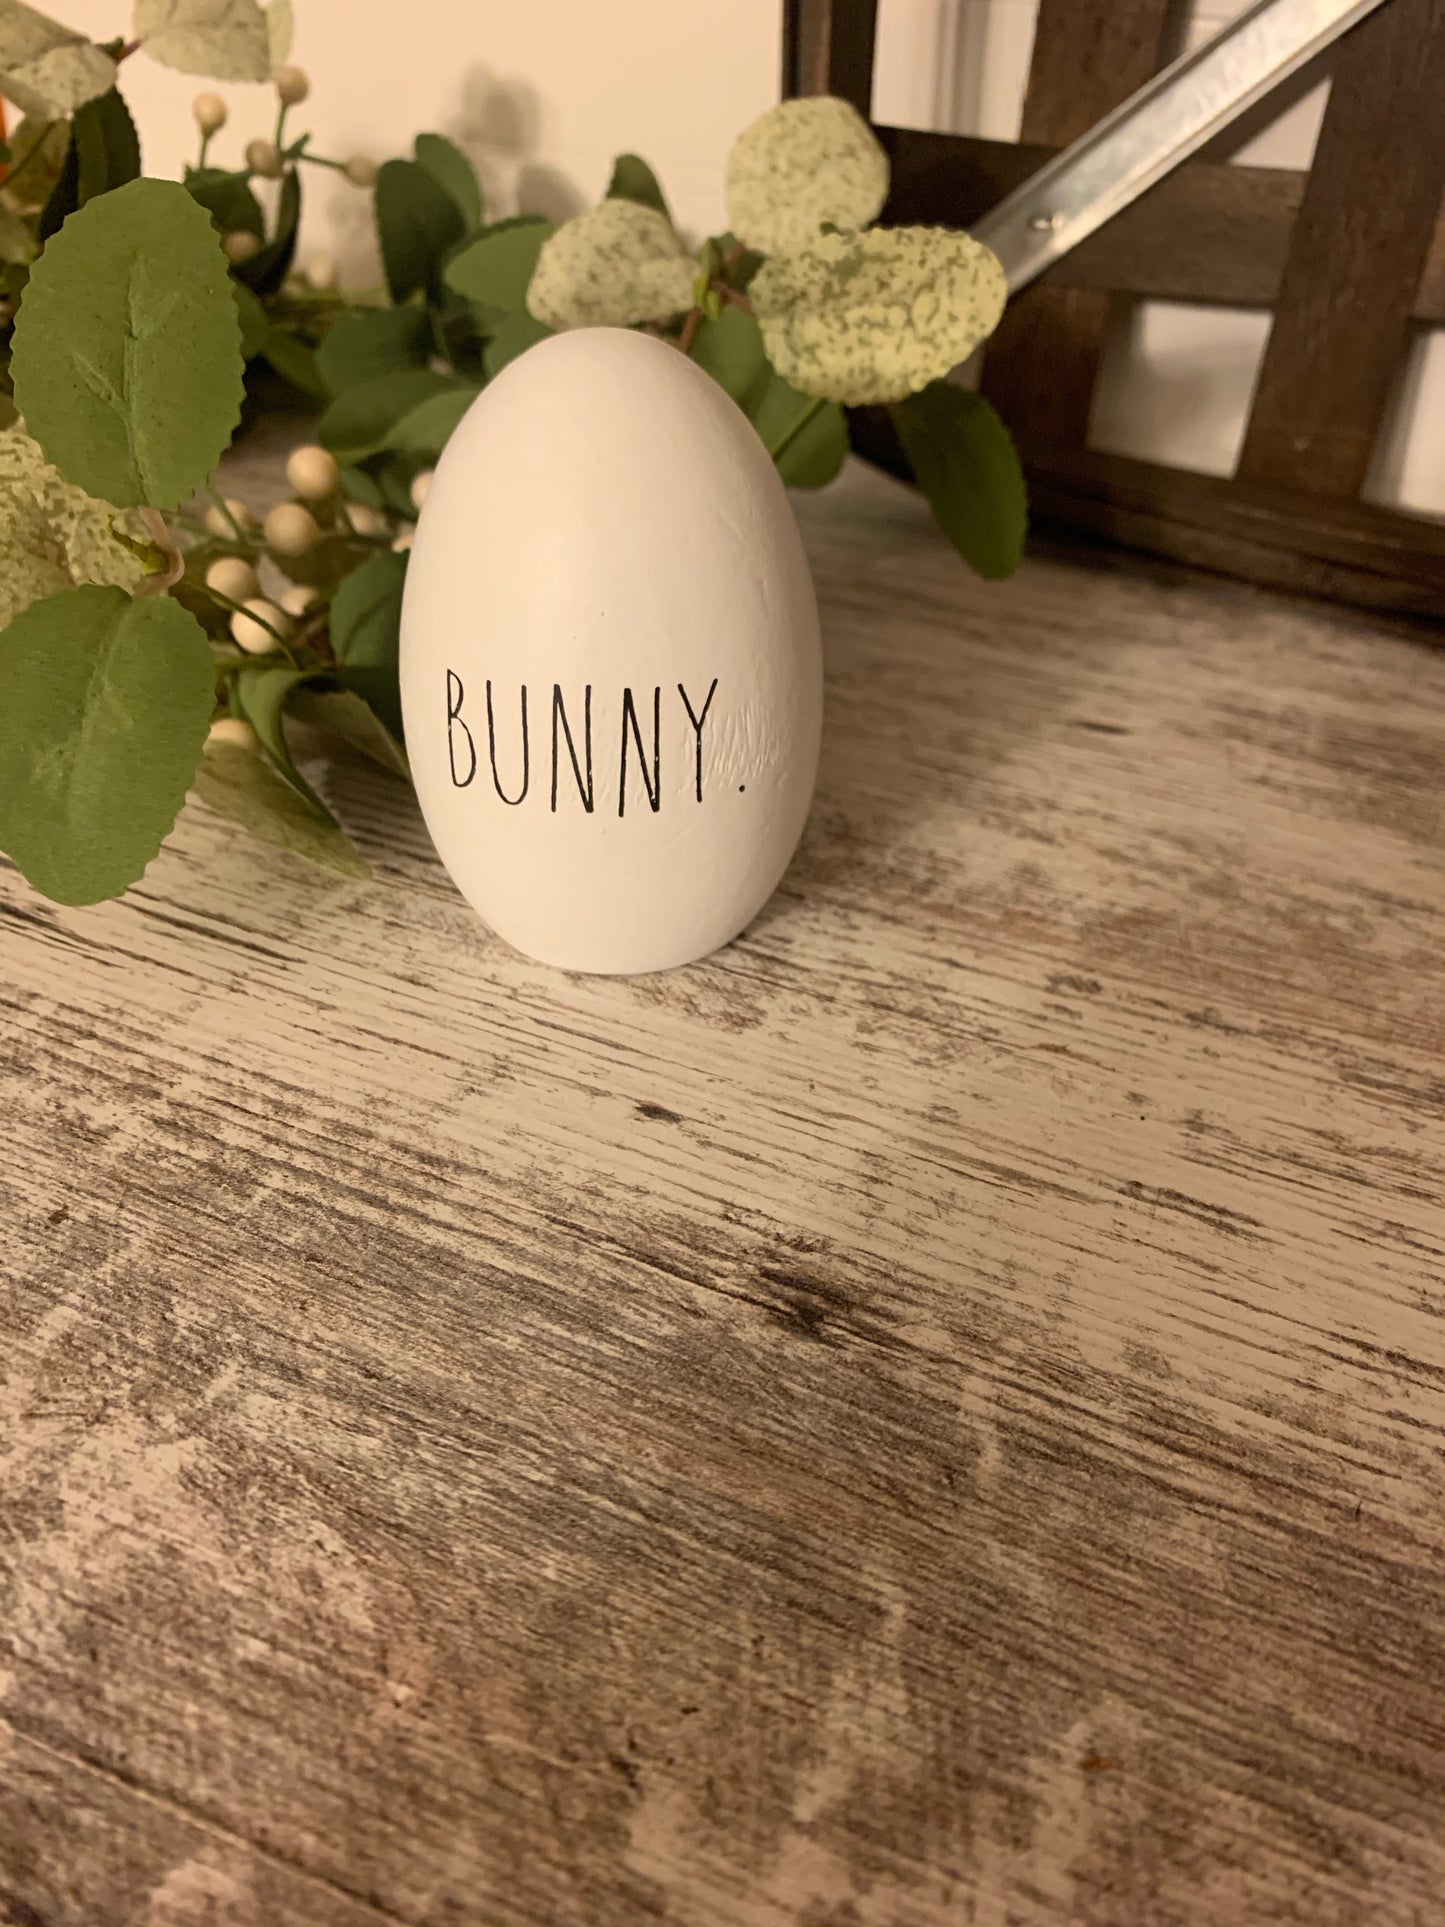 Bunny Wooden Egg